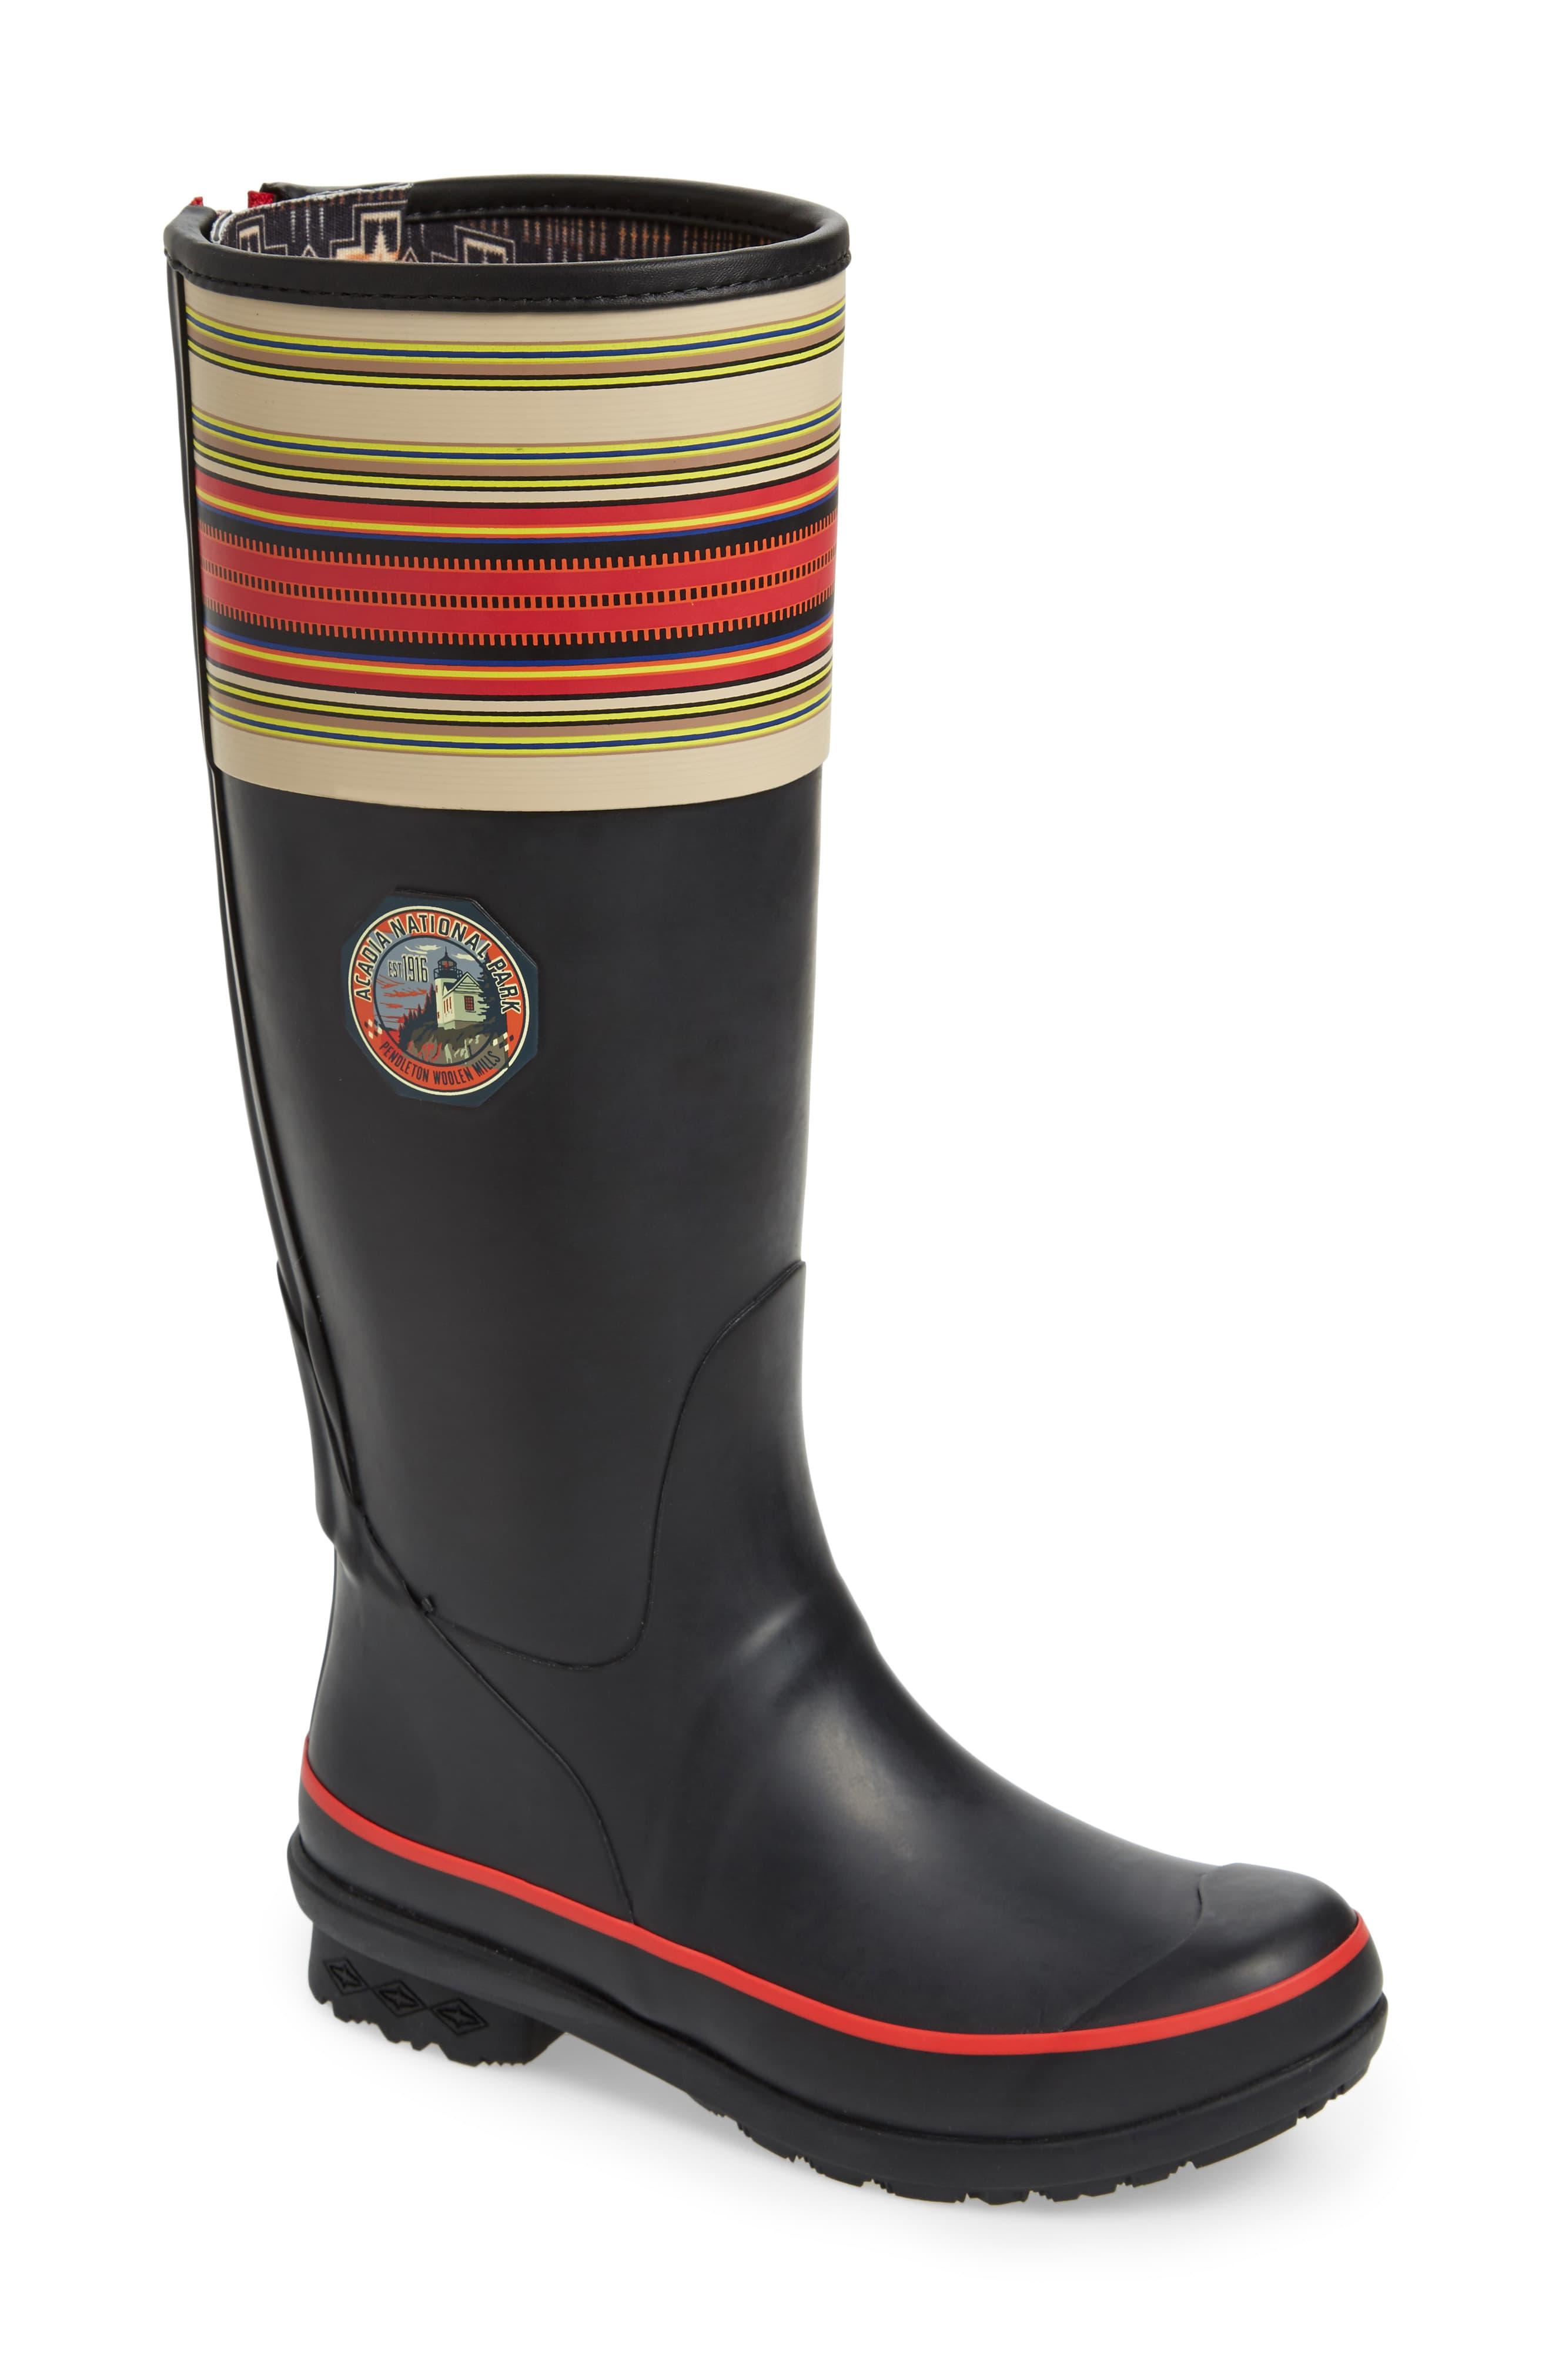 pendleton national park rain boots